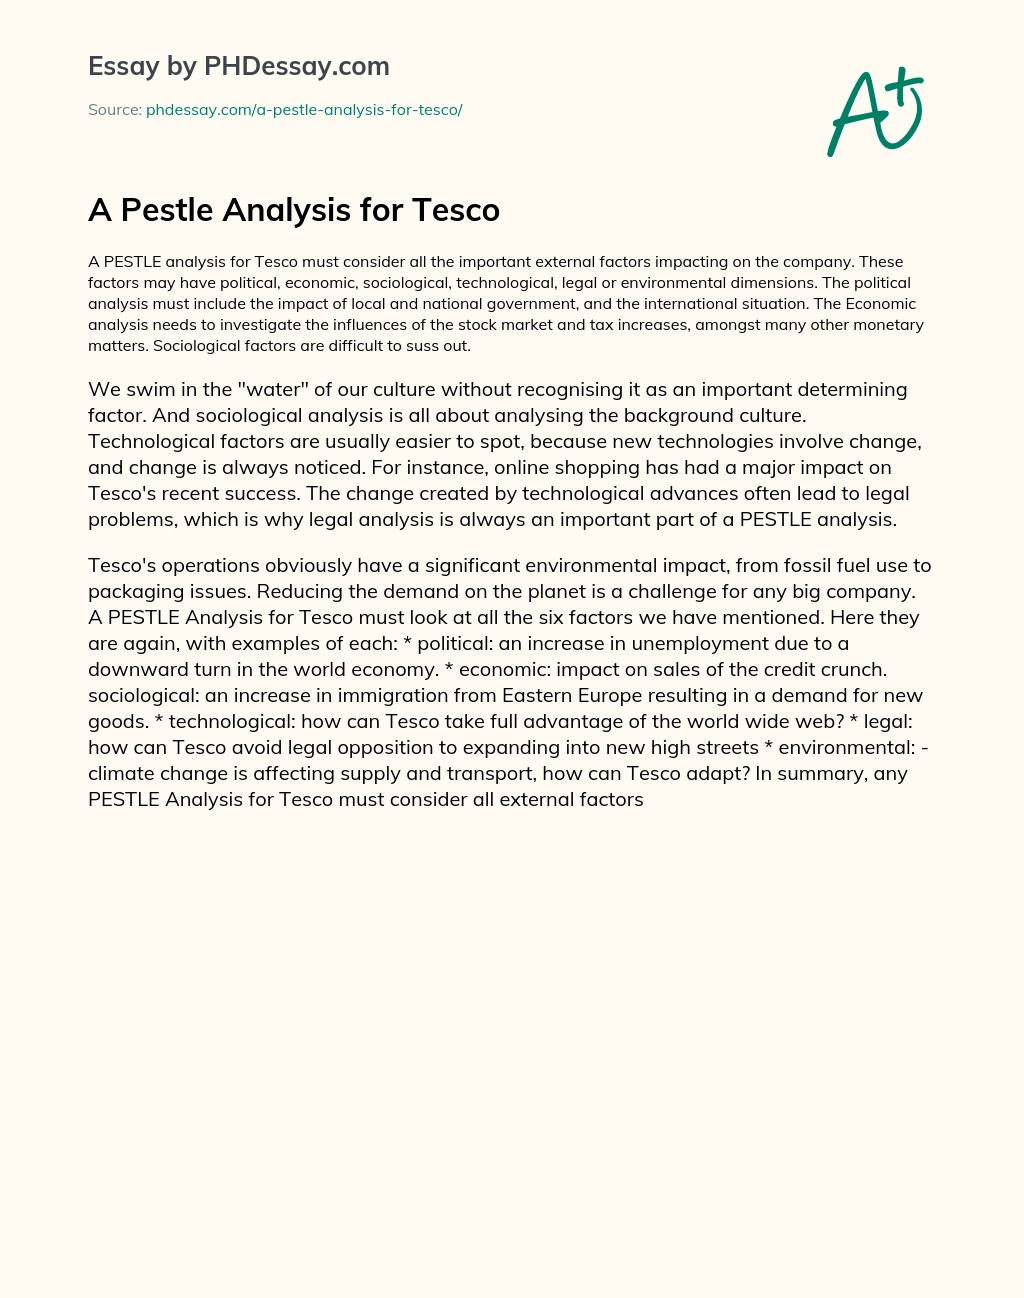 A Pestle Analysis for Tesco essay